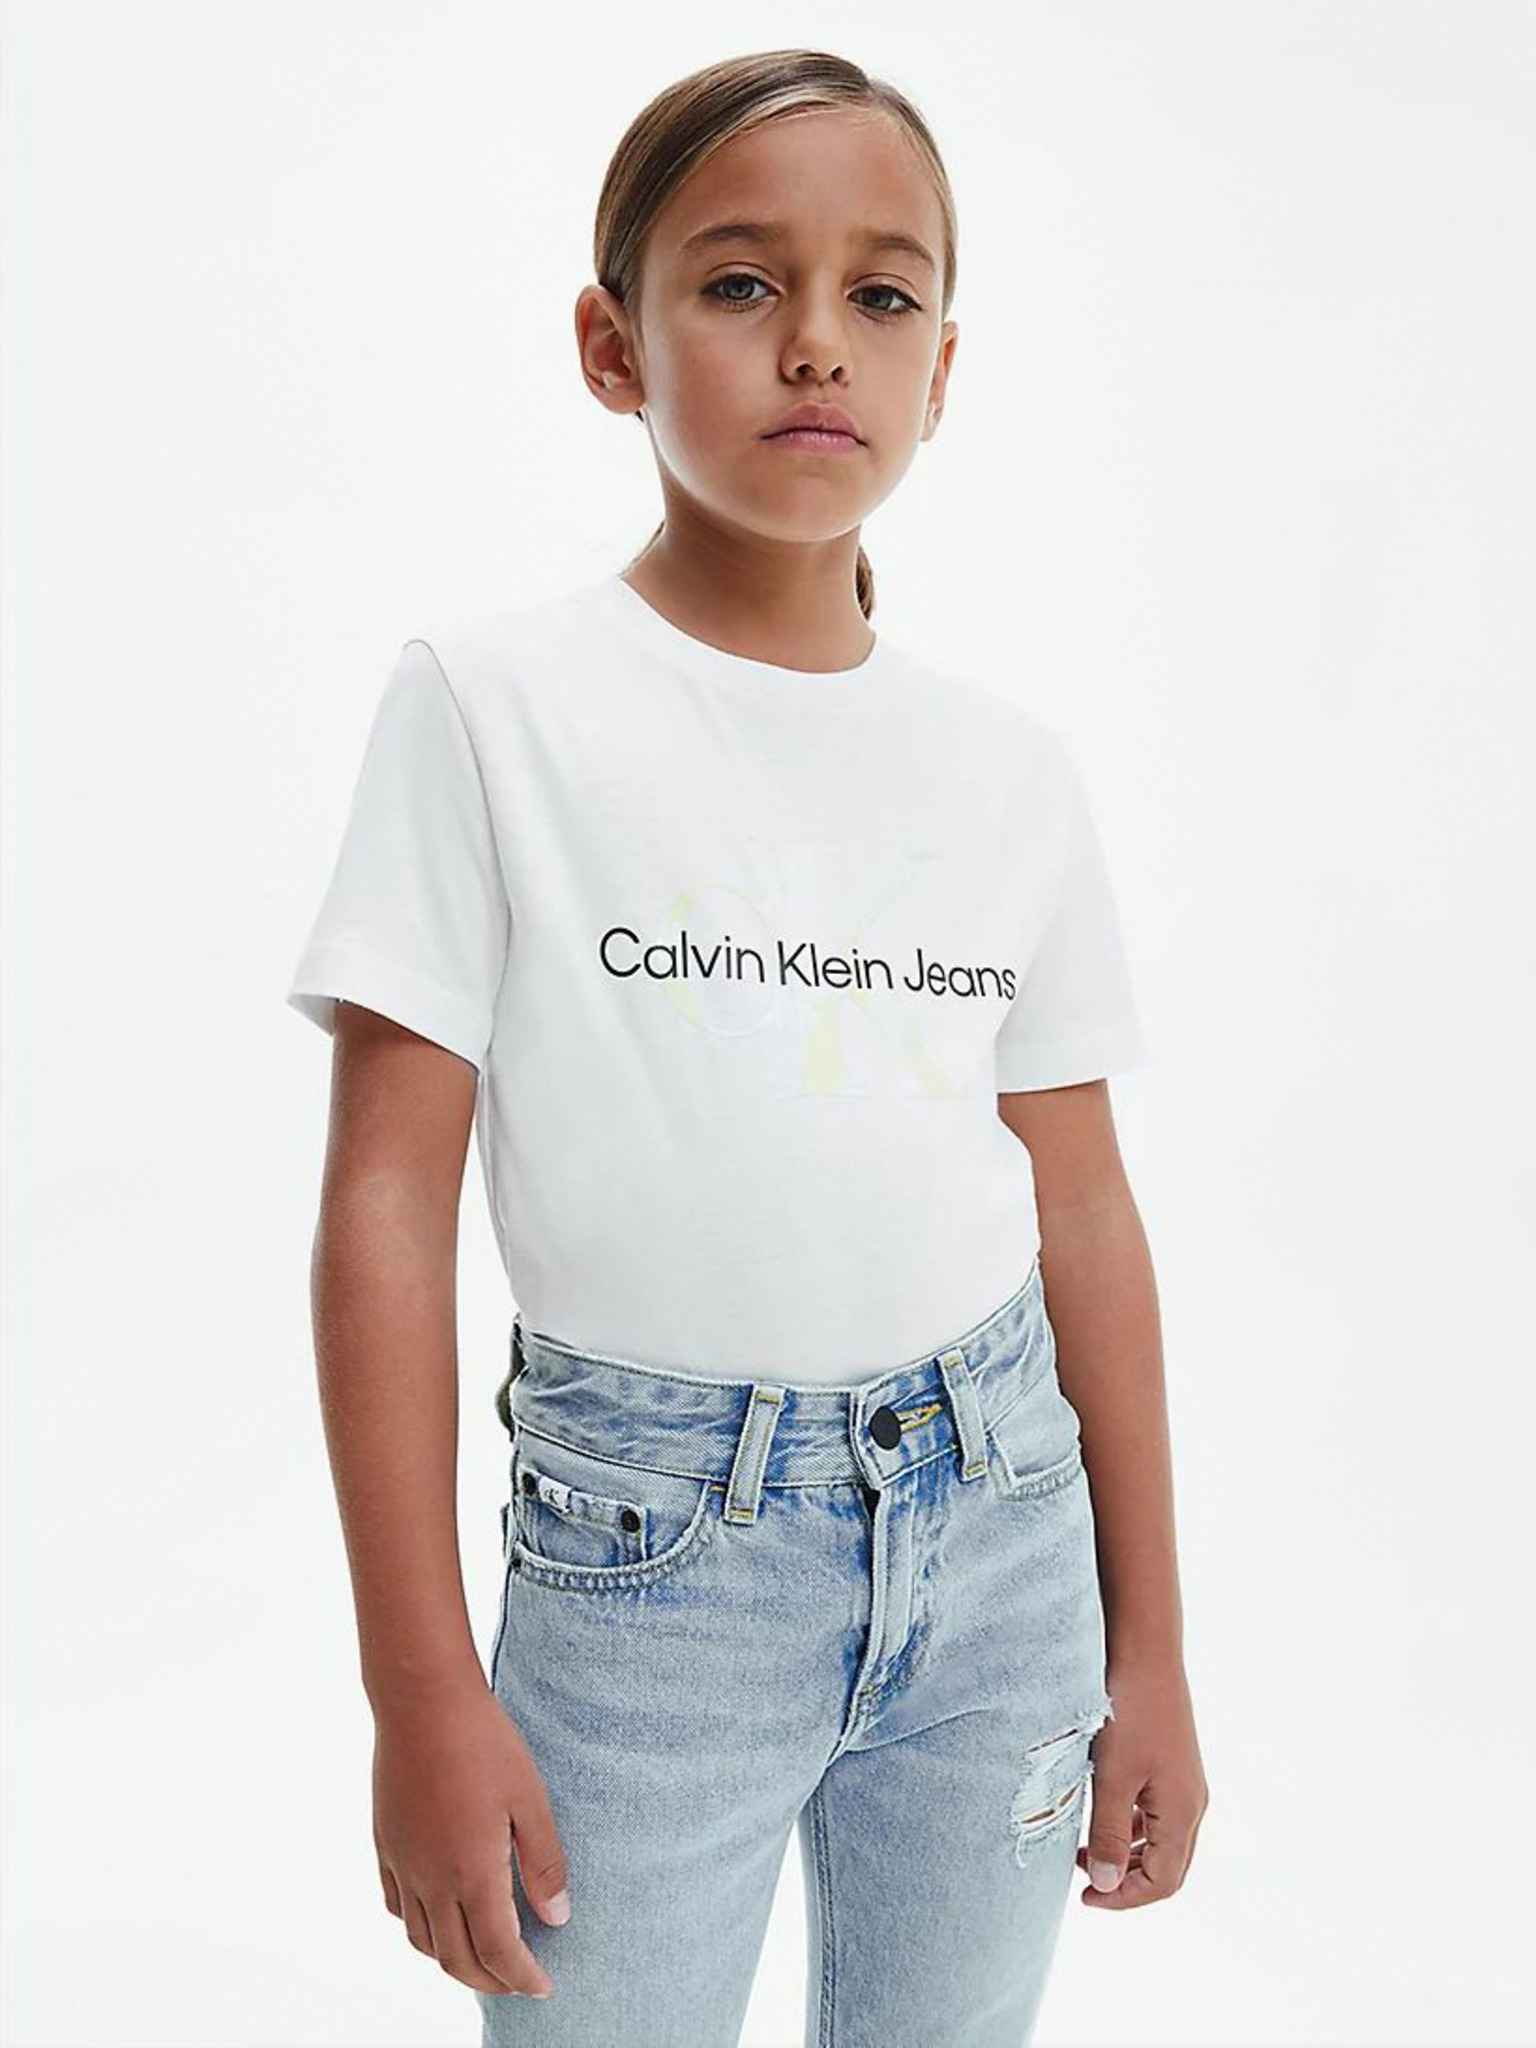 Calvin Klein Jeans - Kids T-shirt